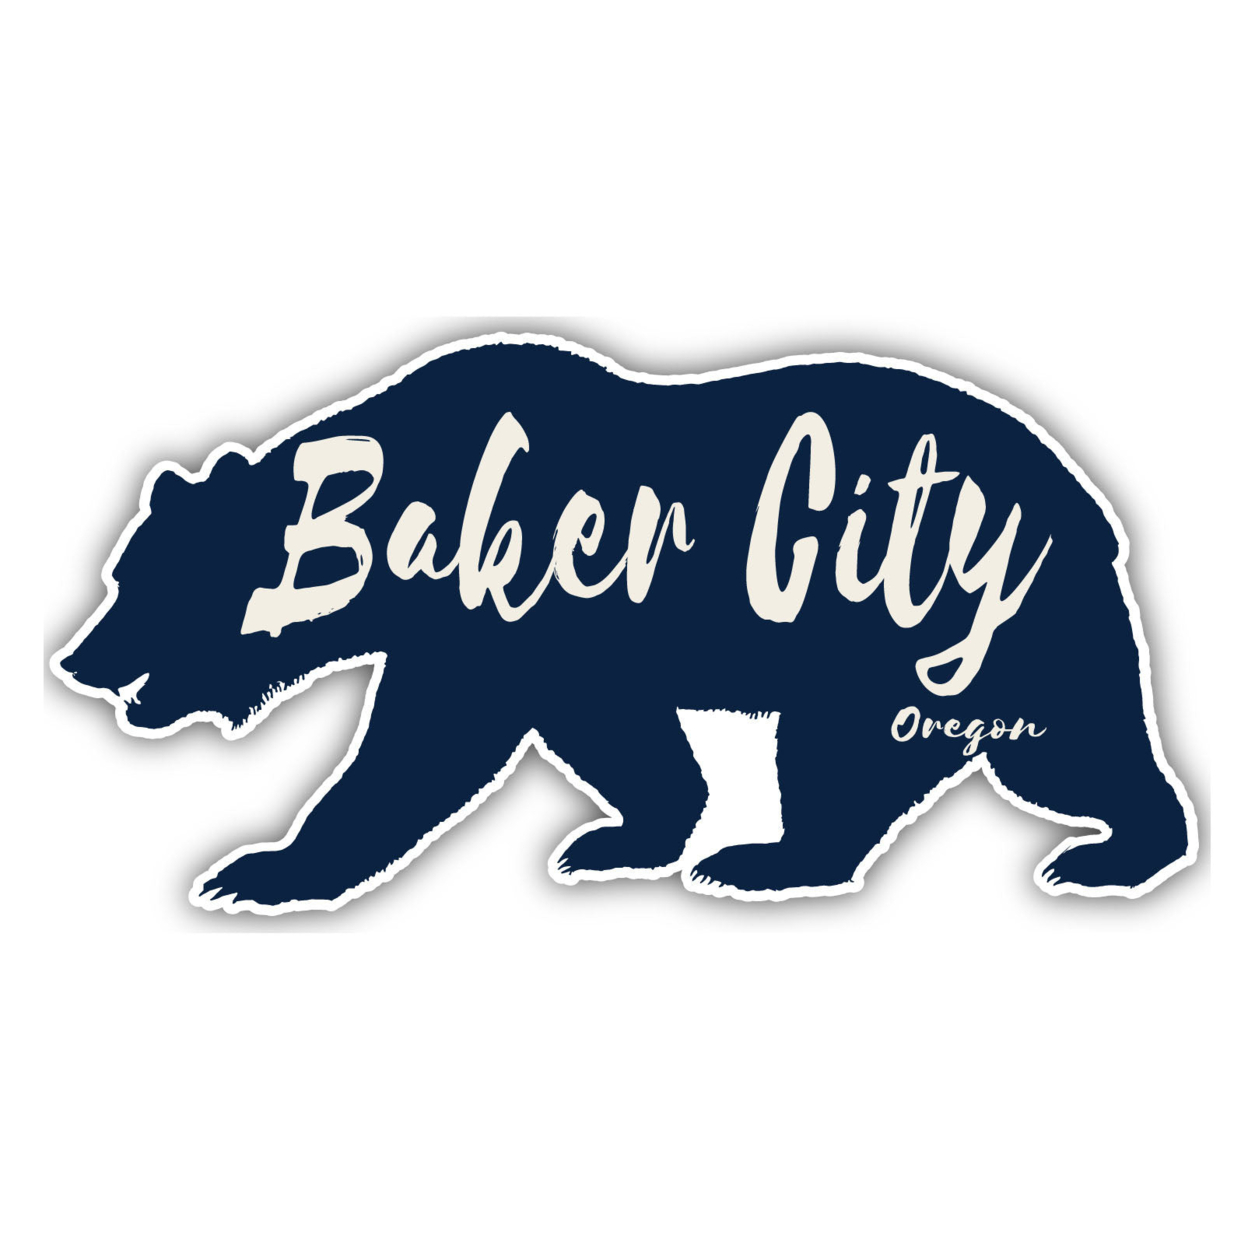 Baker City Oregon Souvenir Decorative Stickers (Choose Theme And Size) - 4-Pack, 2-Inch, Adventures Awaits